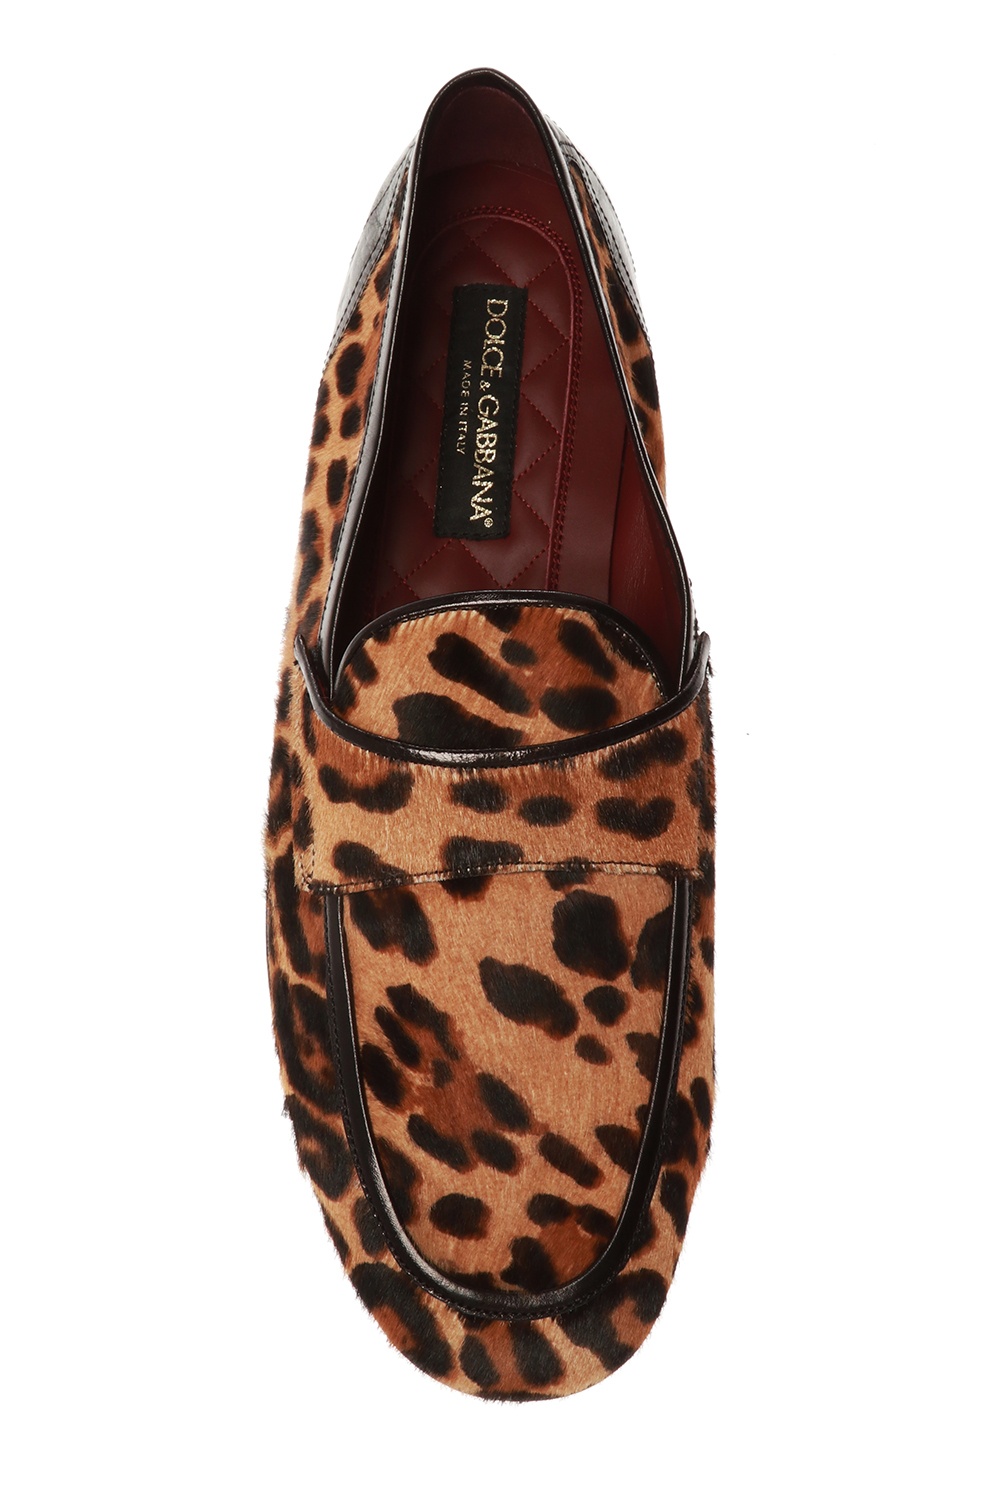 Dolce & Gabbana crystal-embellished cufflinks Leather loafers